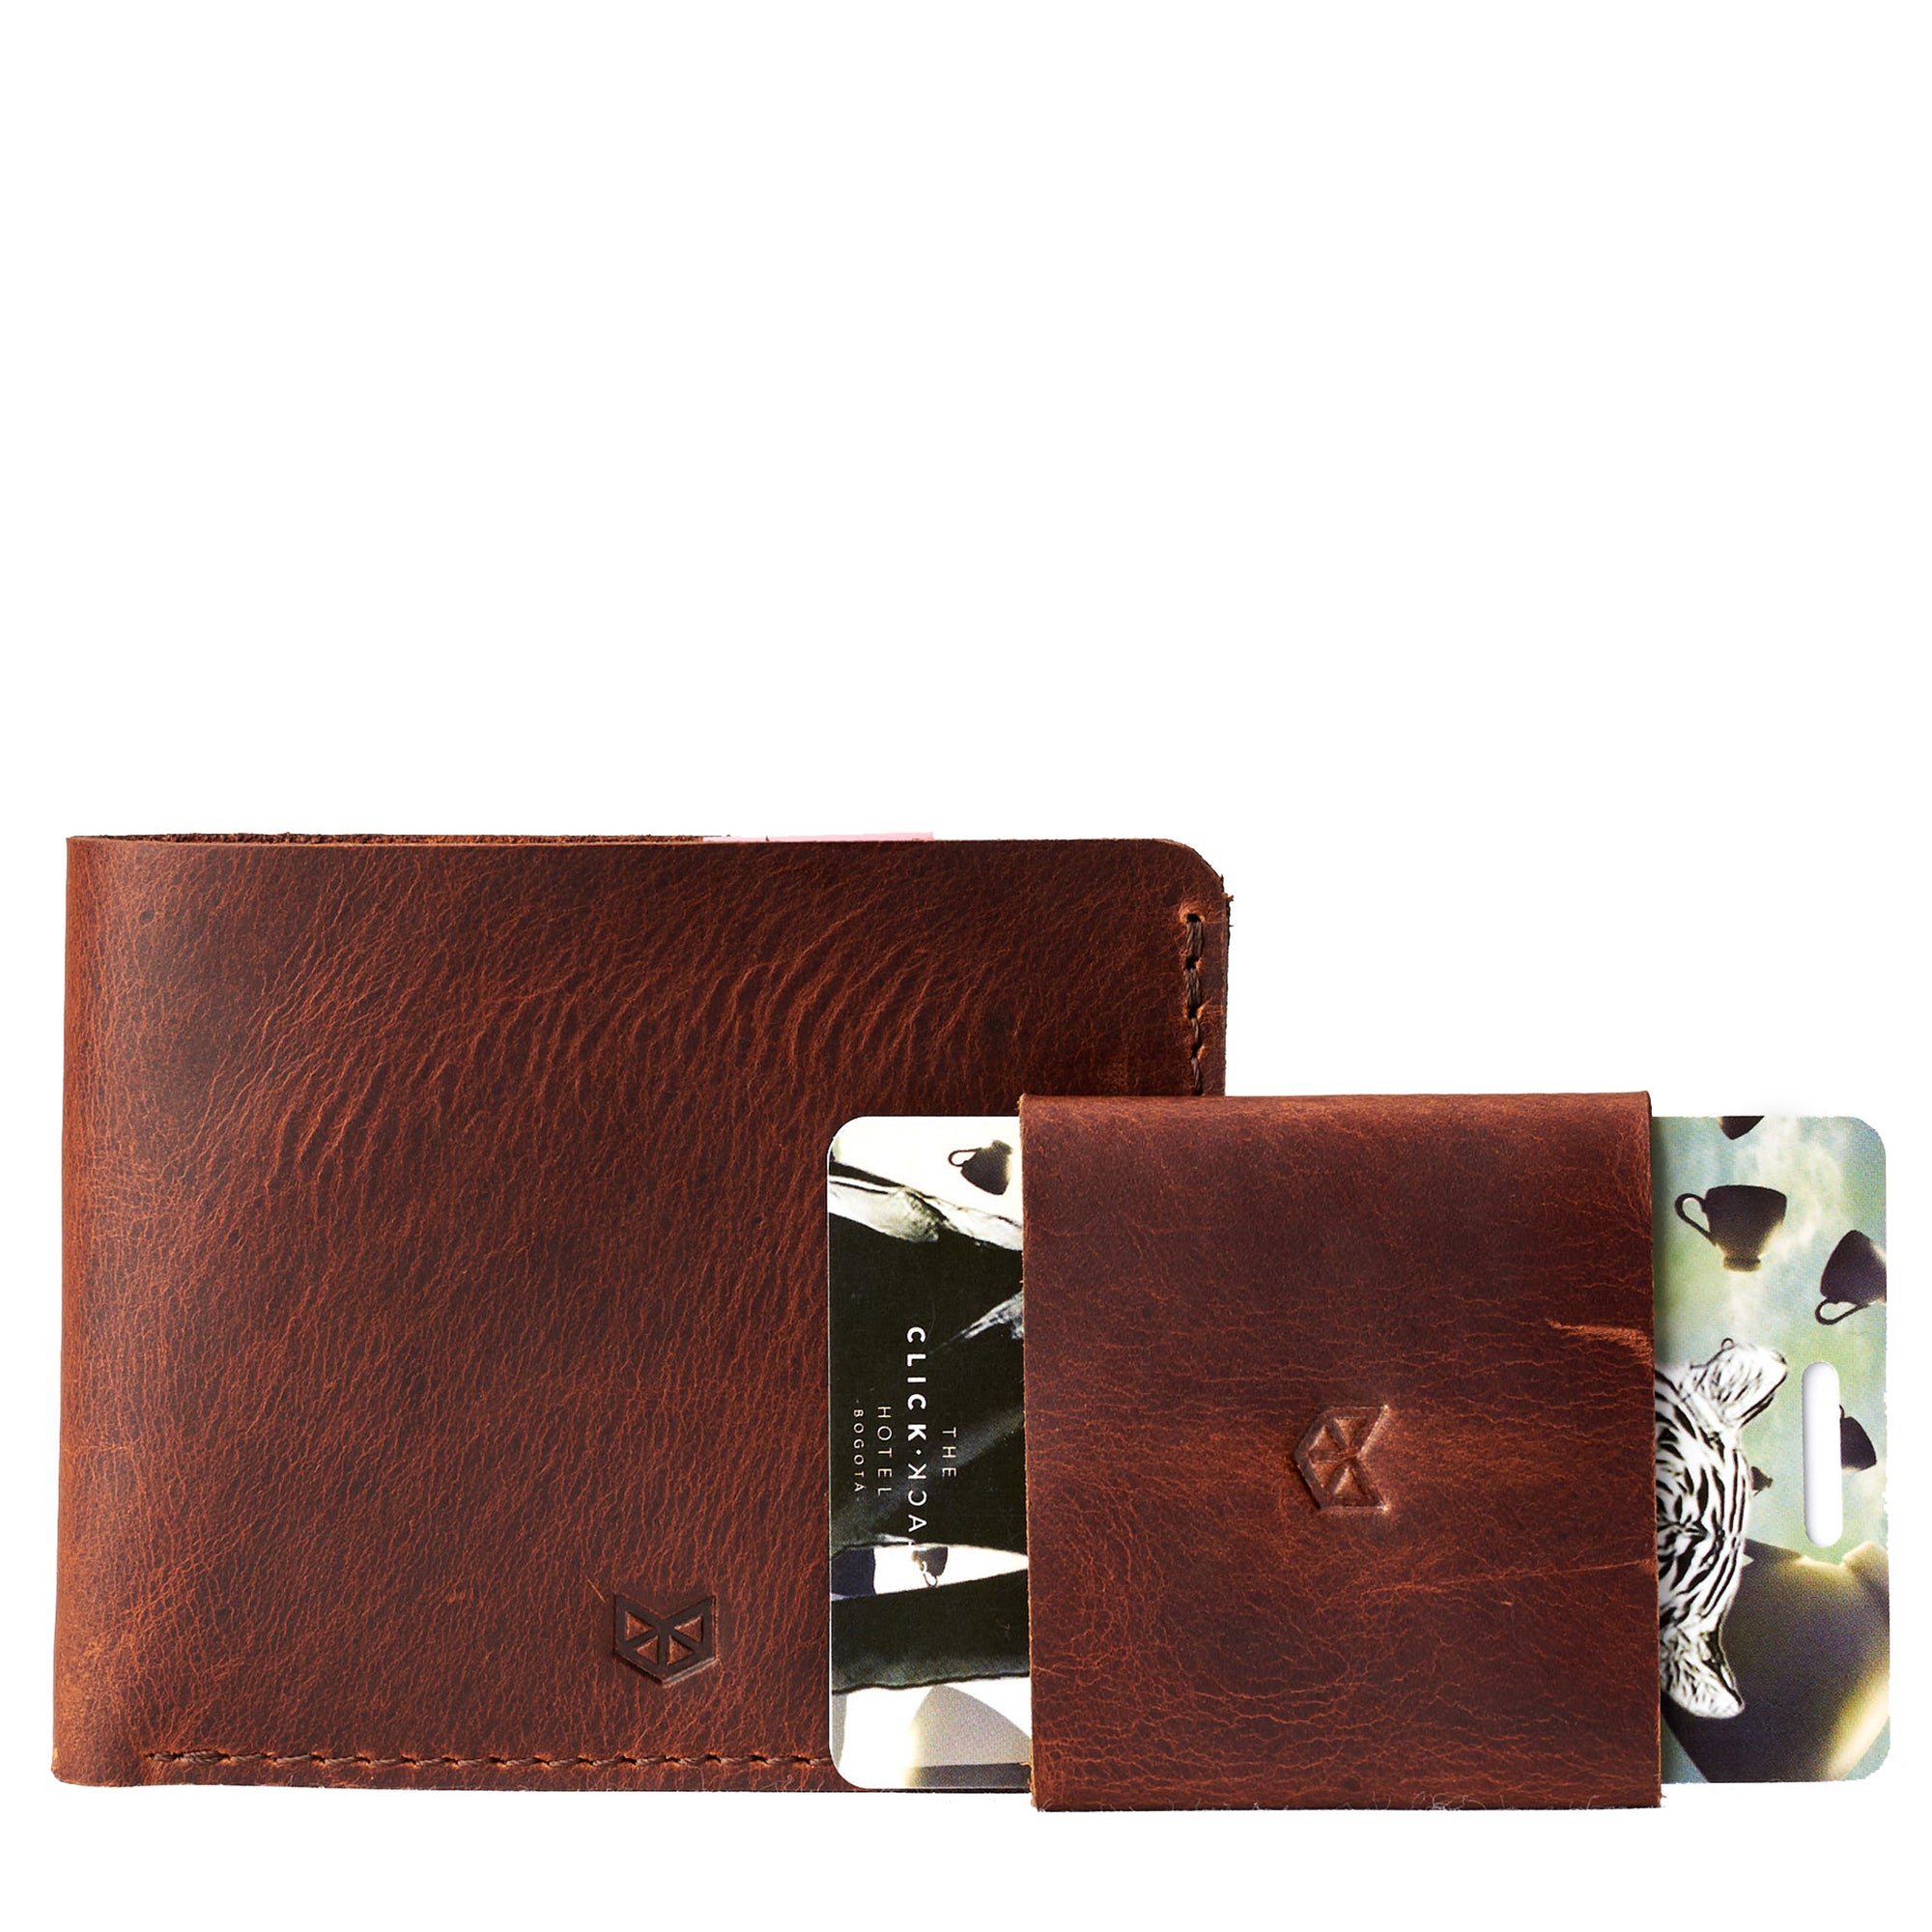 Wallet kit. Leather sandstone slim wallet gifts for men handmade accessories. minimalist full grain leather thin wallet. Made by Capra Leather. 